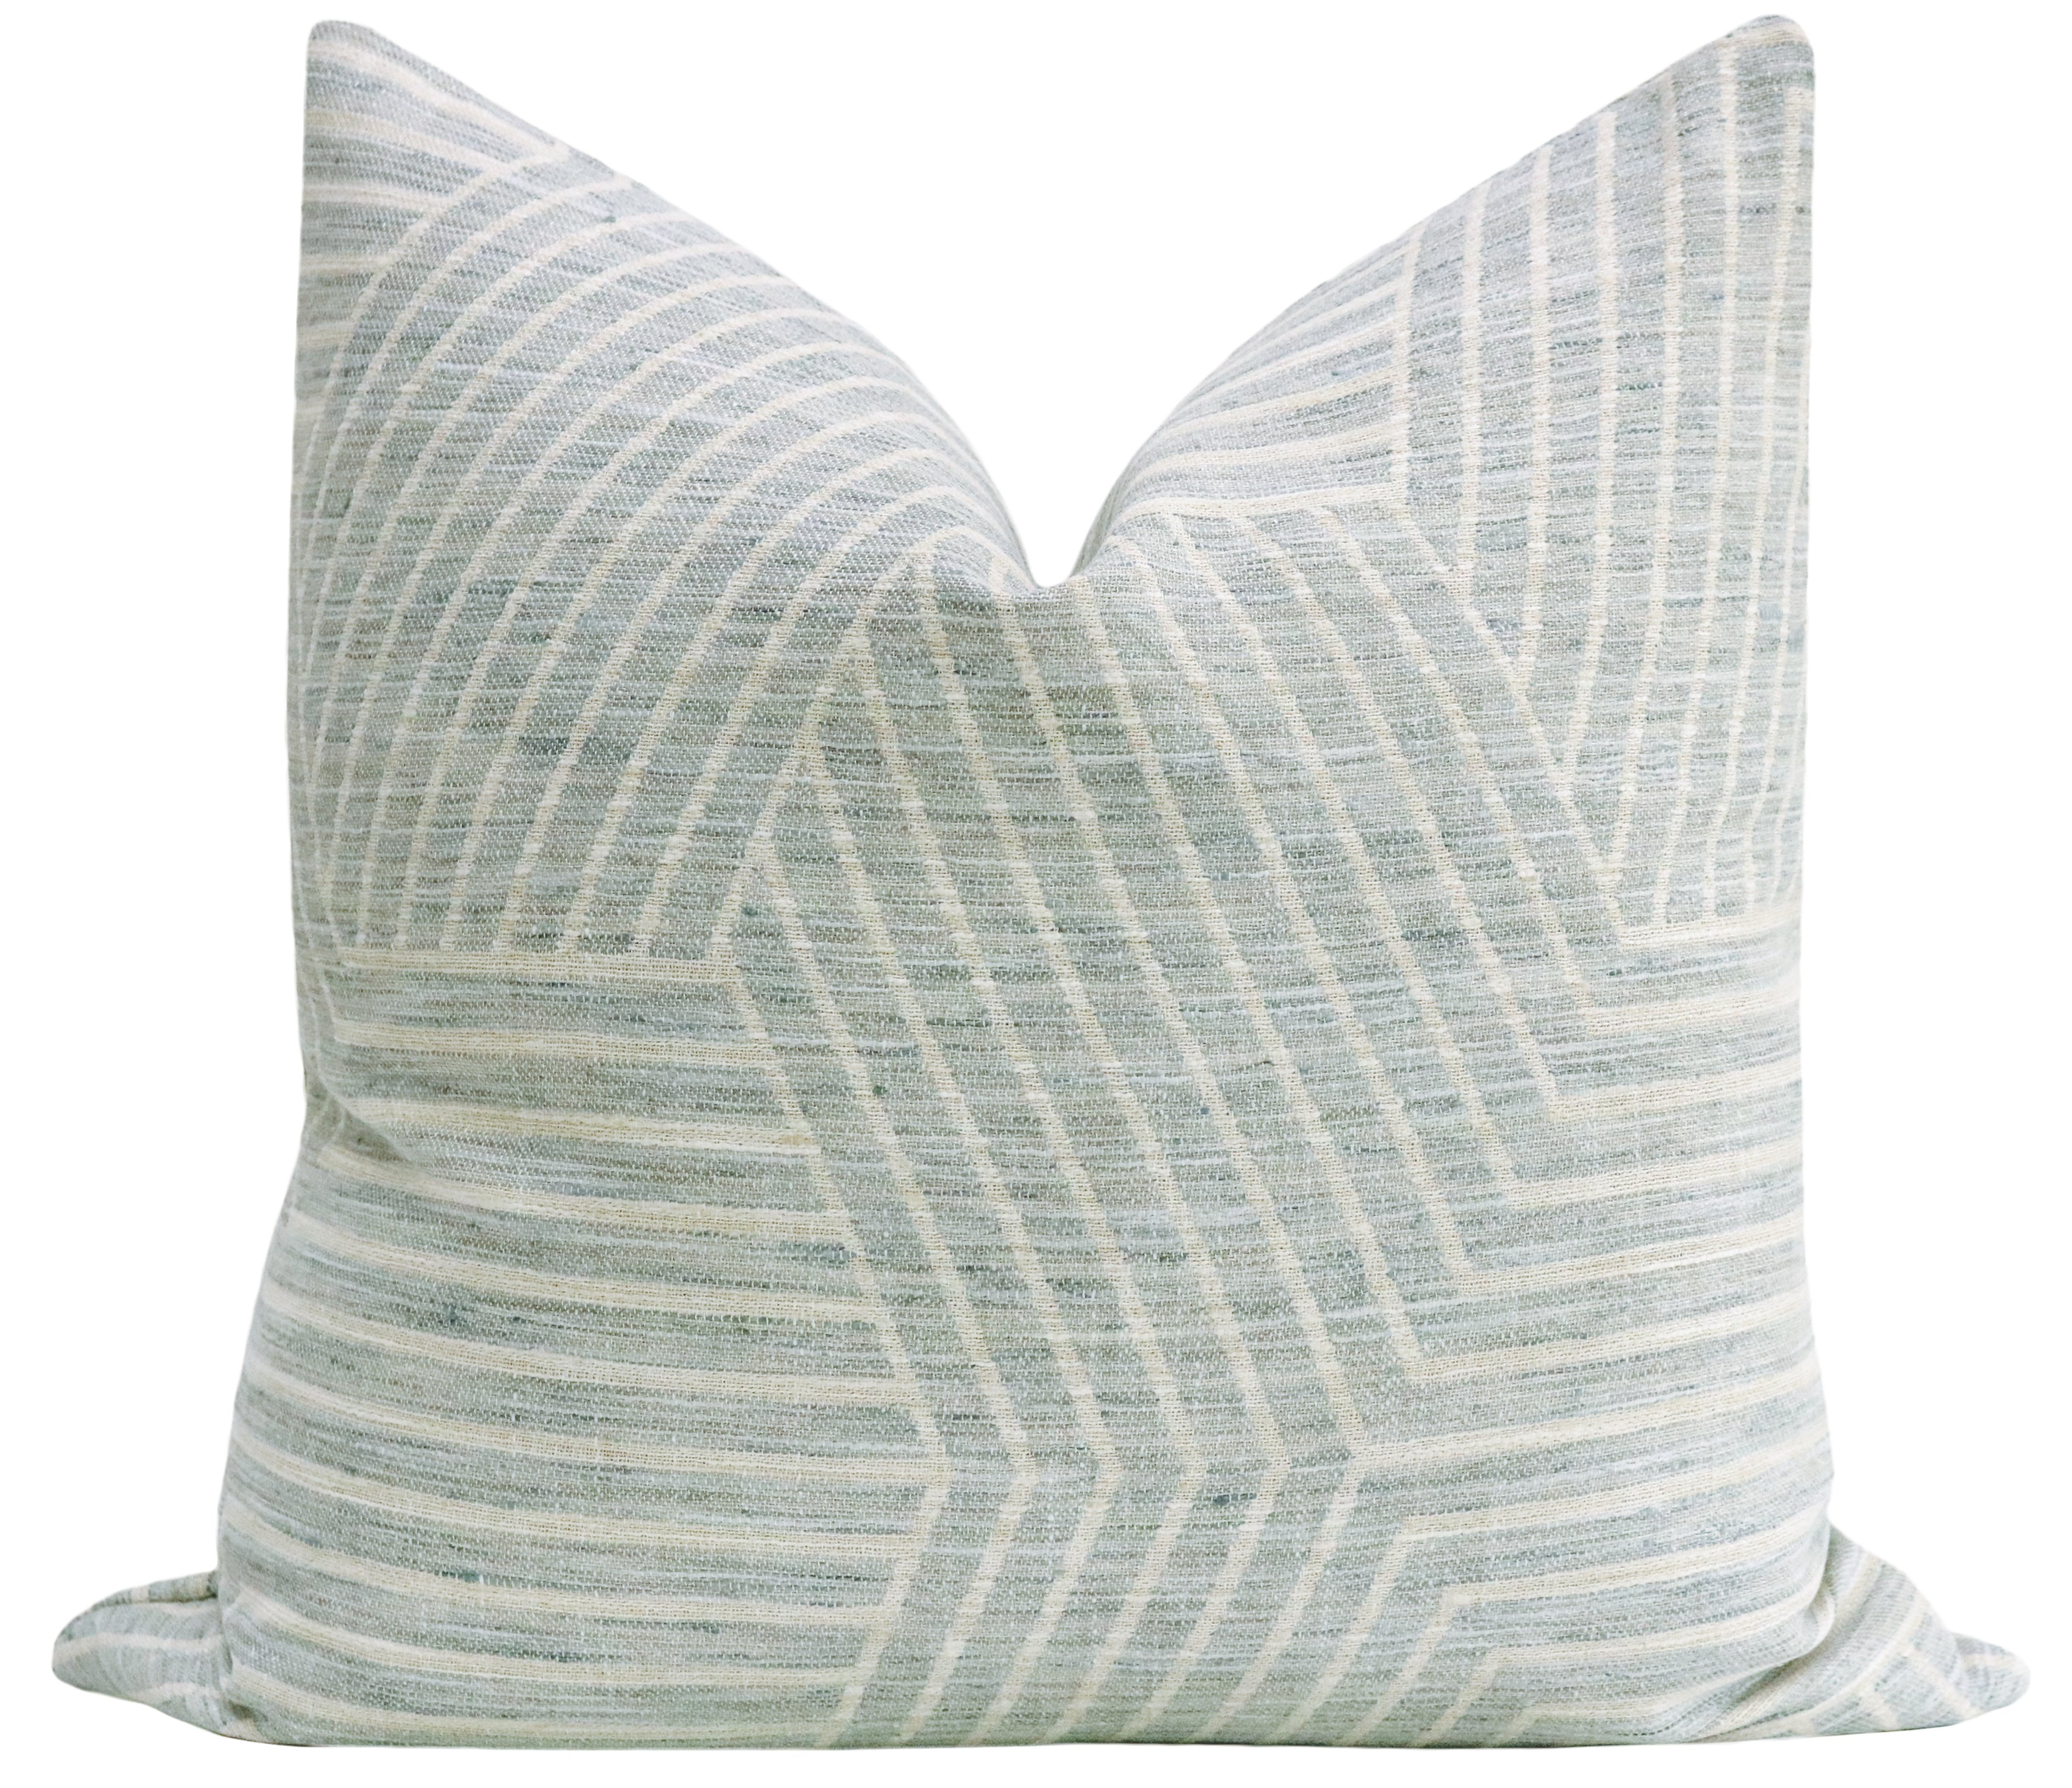 Labyrinth Linen Pillow Cover, Spa Blue, 18" x 18" - Little Design Company